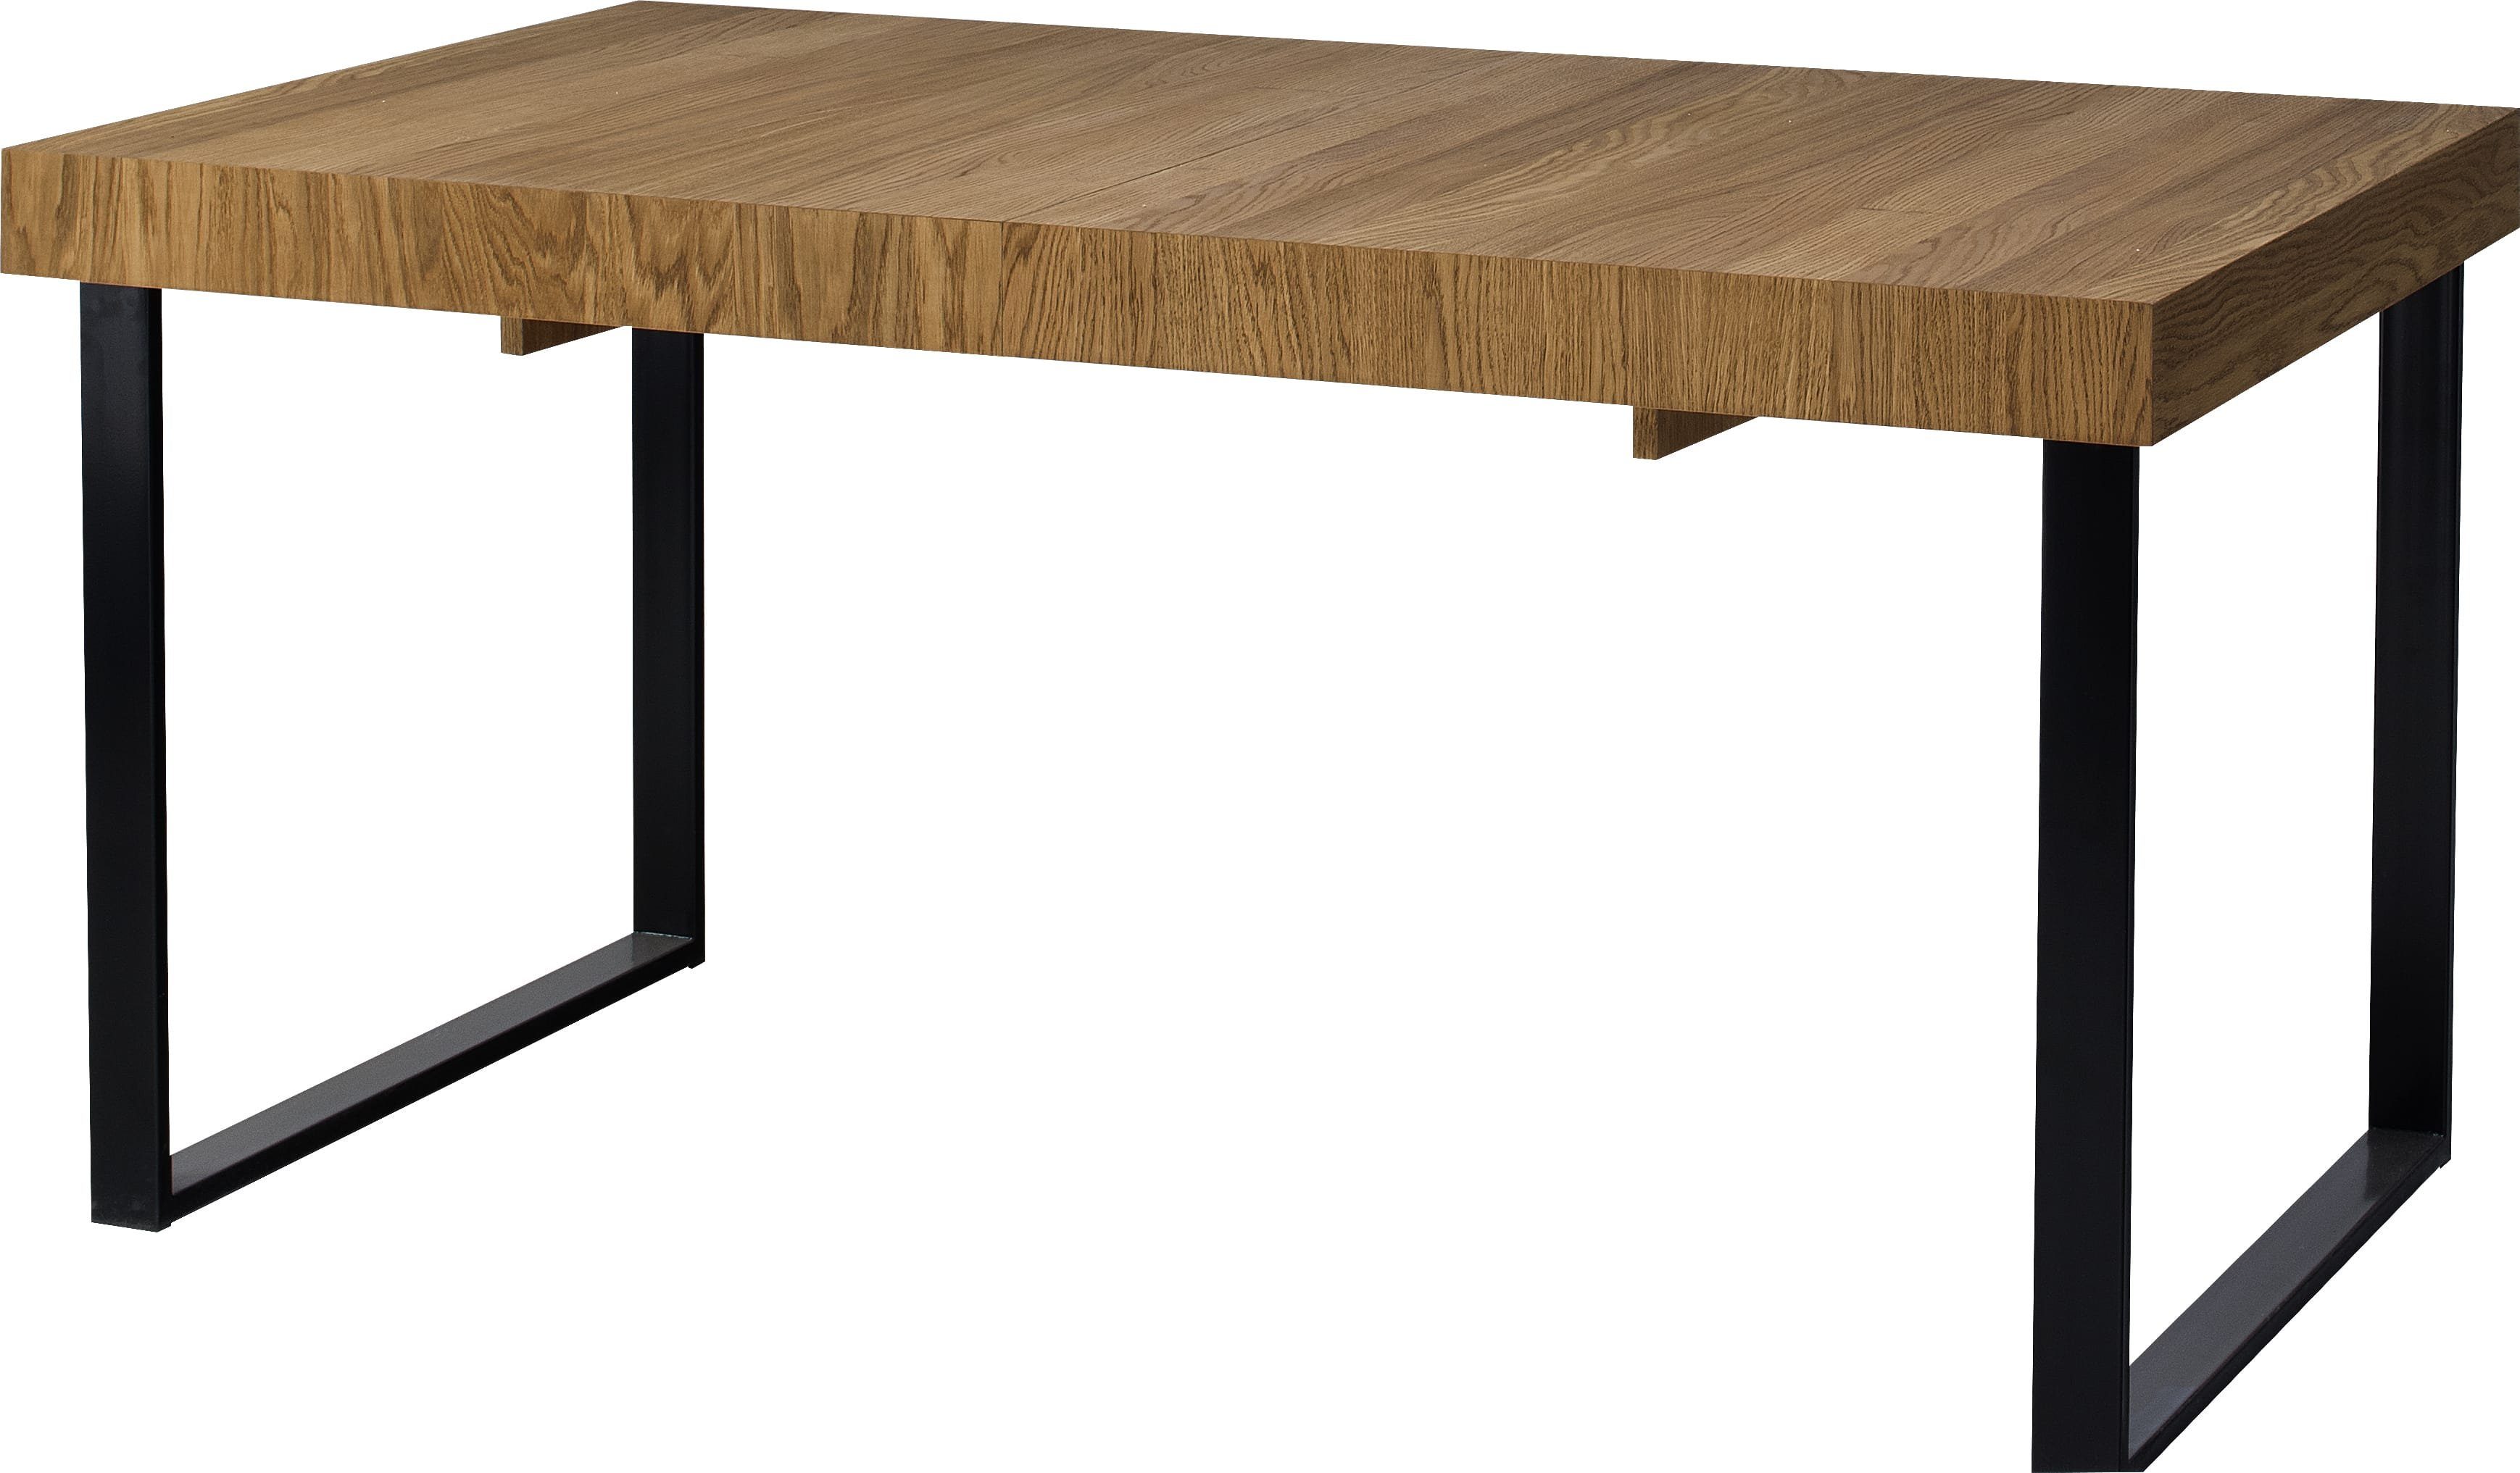 99rooms Esstisch Marakesh Massivholz Honig Eiche Schwarz Matt (Esstisch, Tisch), aus Massivholz, ausziehbar, rechteckig, Skandinavisch Design, Metall